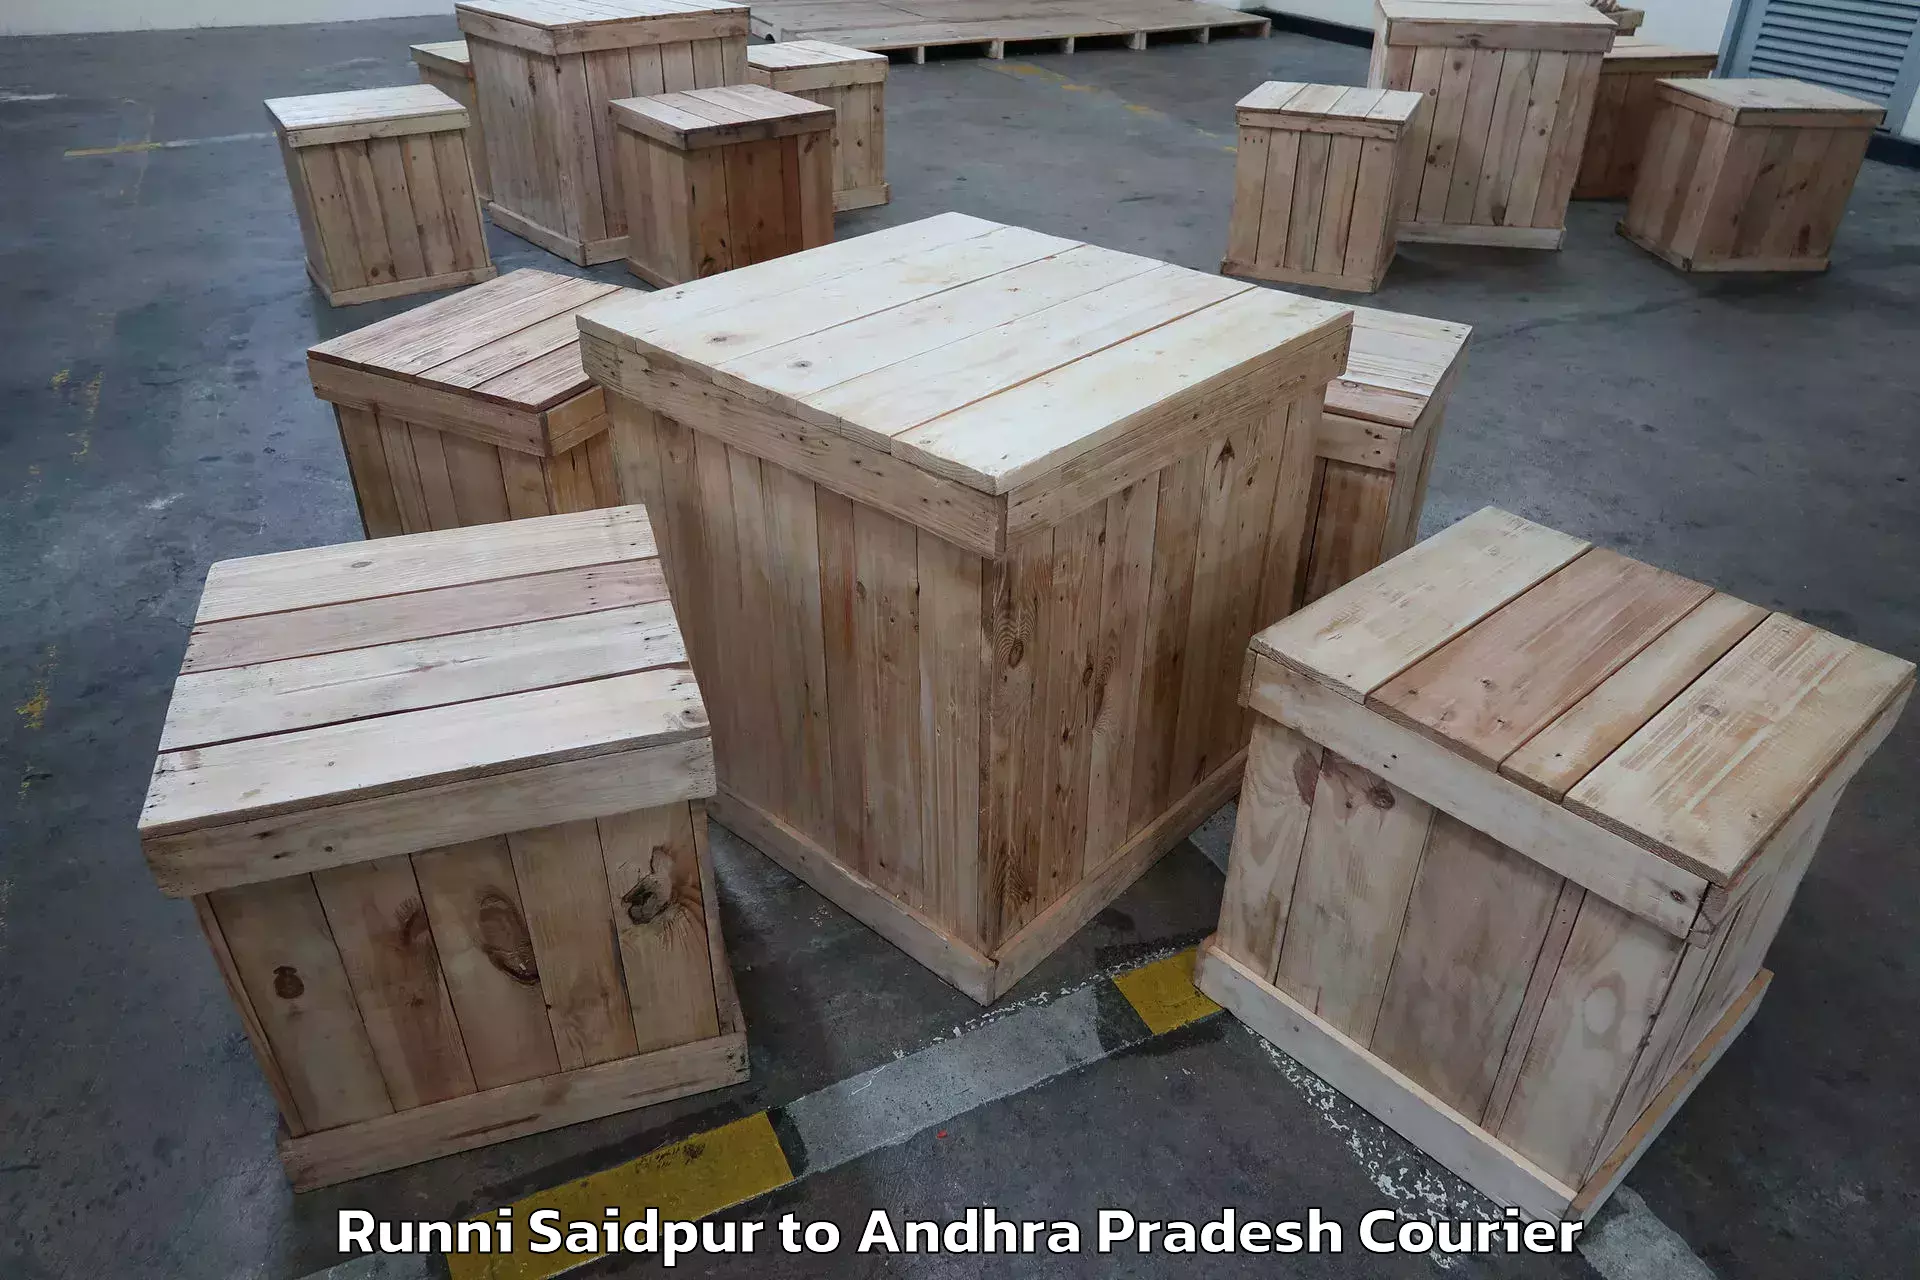 Efficient moving company Runni Saidpur to Kothapalli